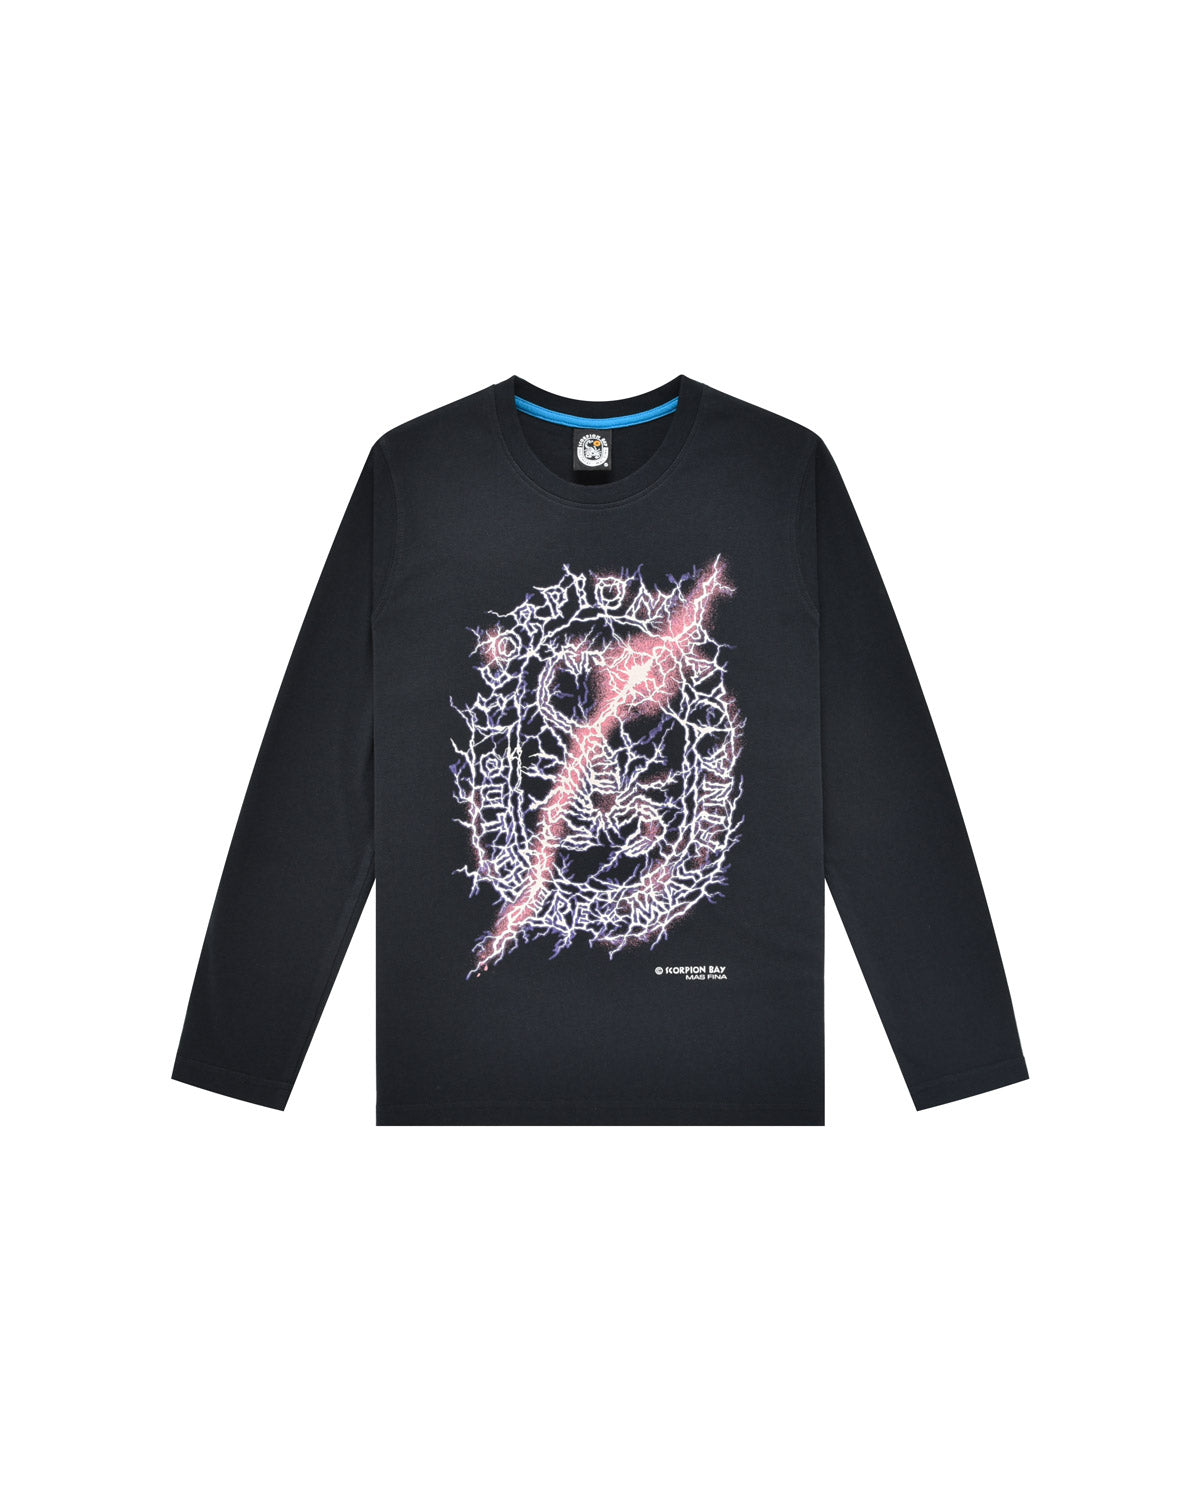 Kid | 100% Cotton Long Sleeve Black T-Shirt With "Thunder Bay" Print